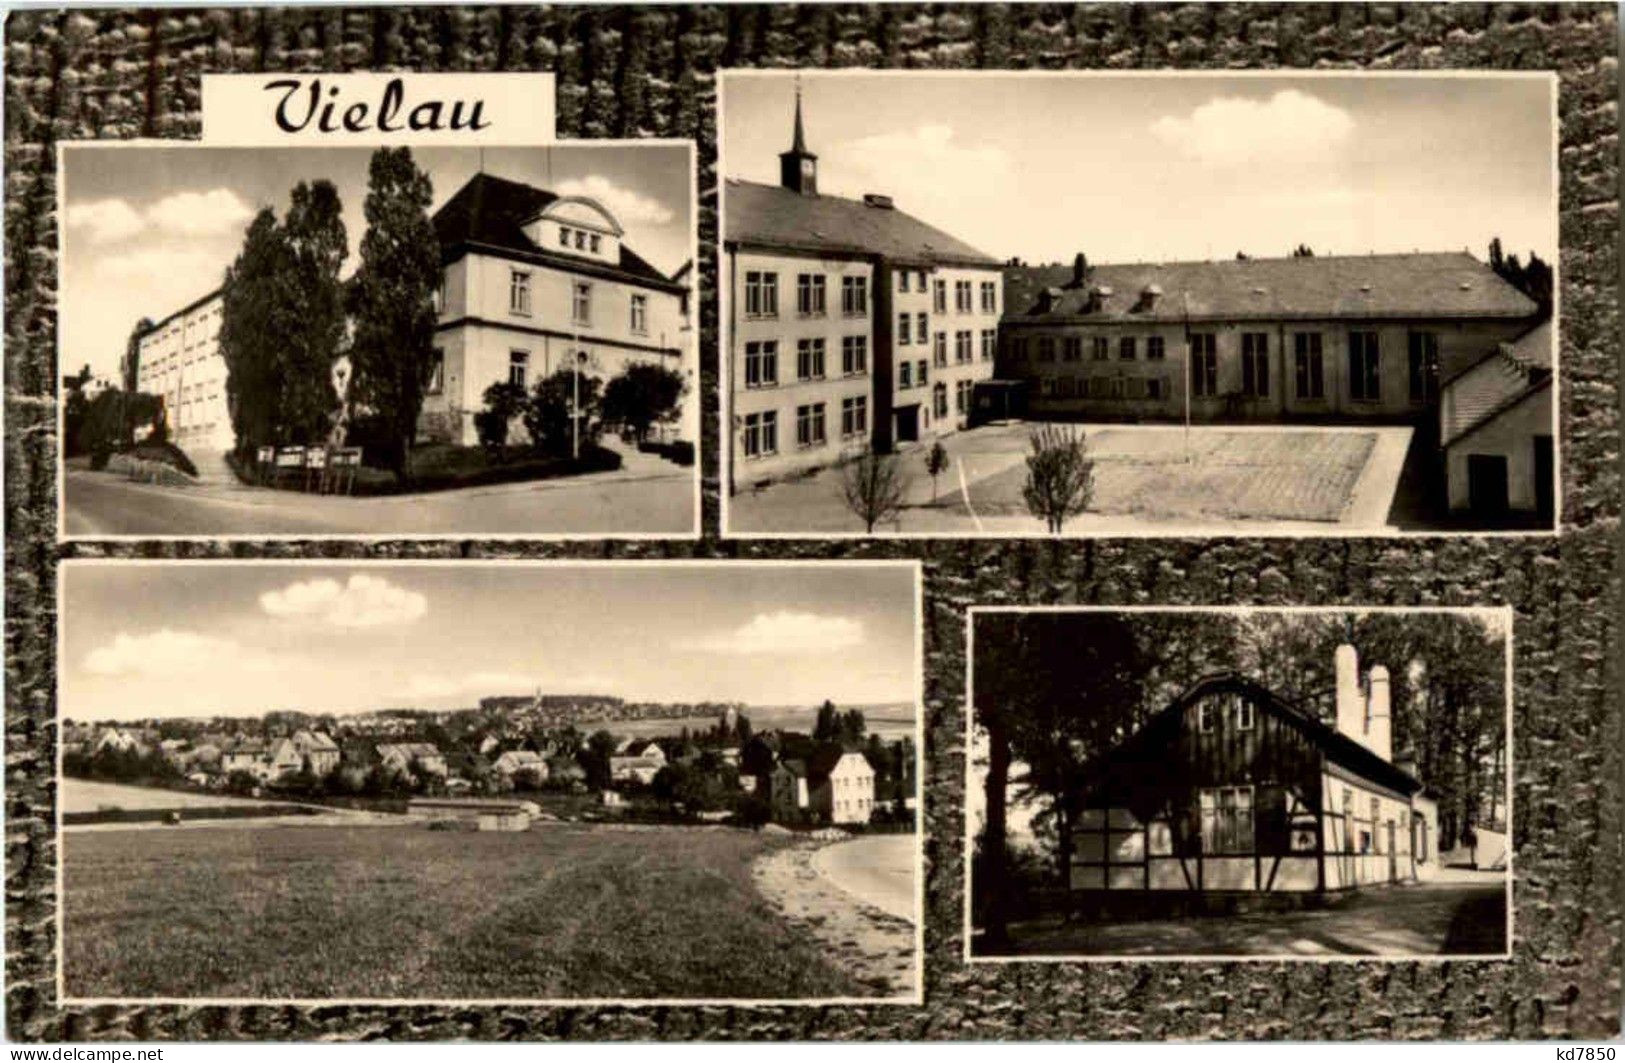 Vielau - Zwickau